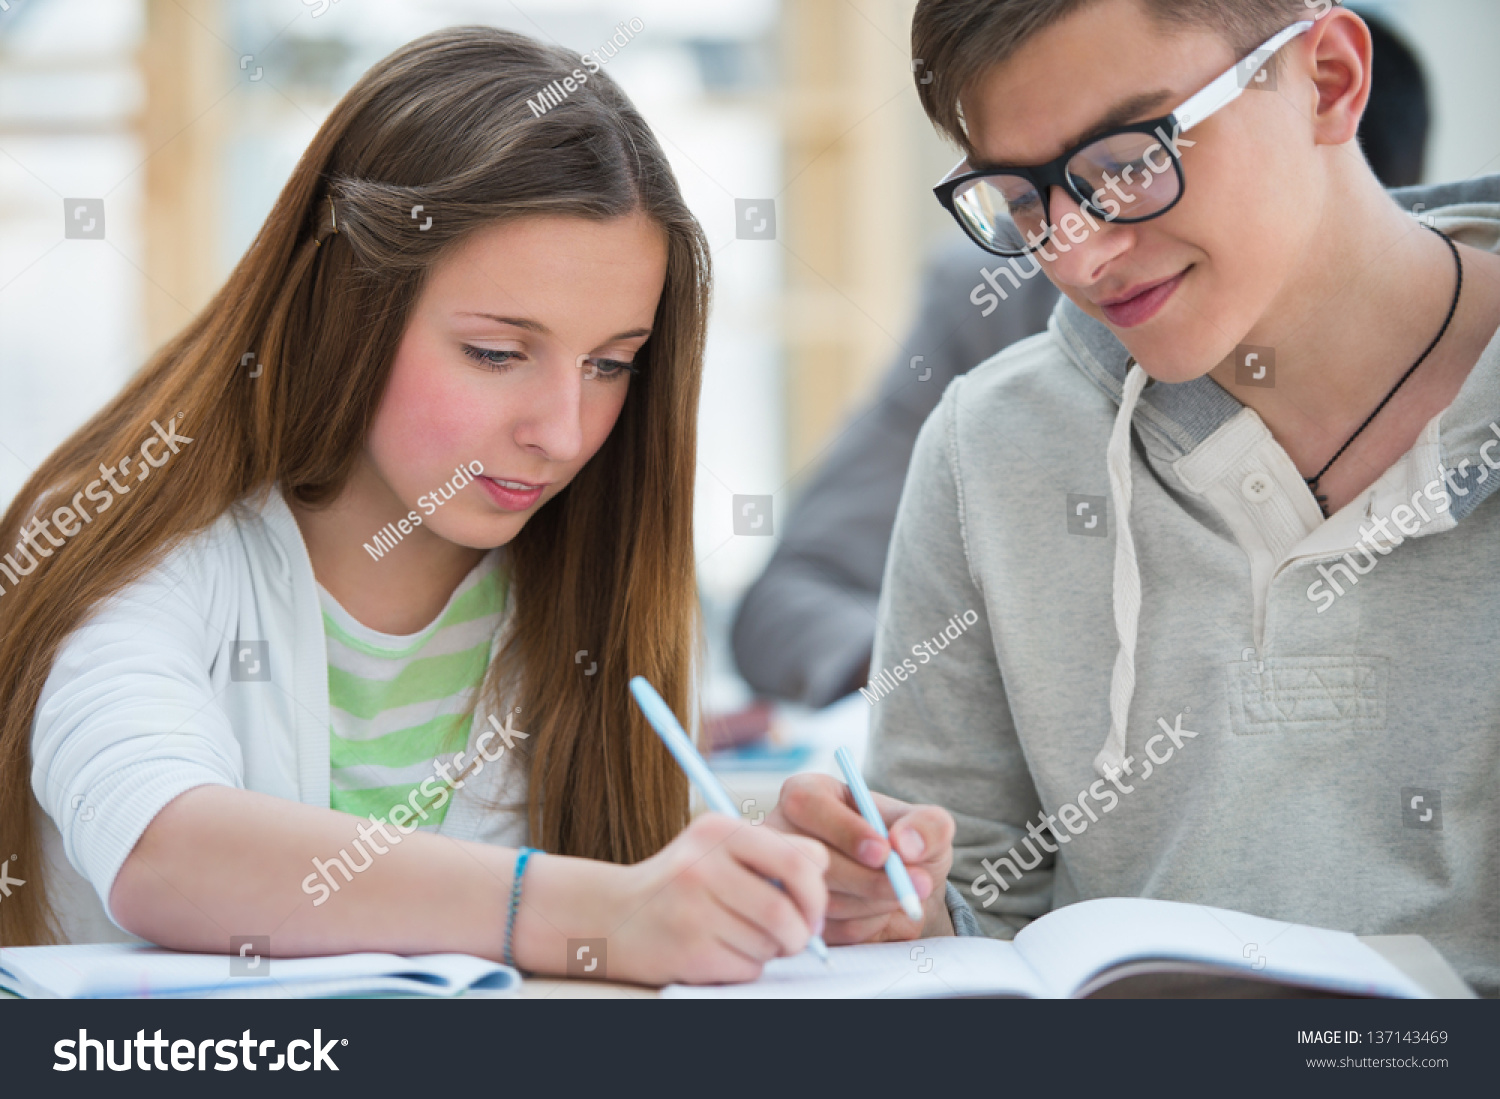 High school students homework